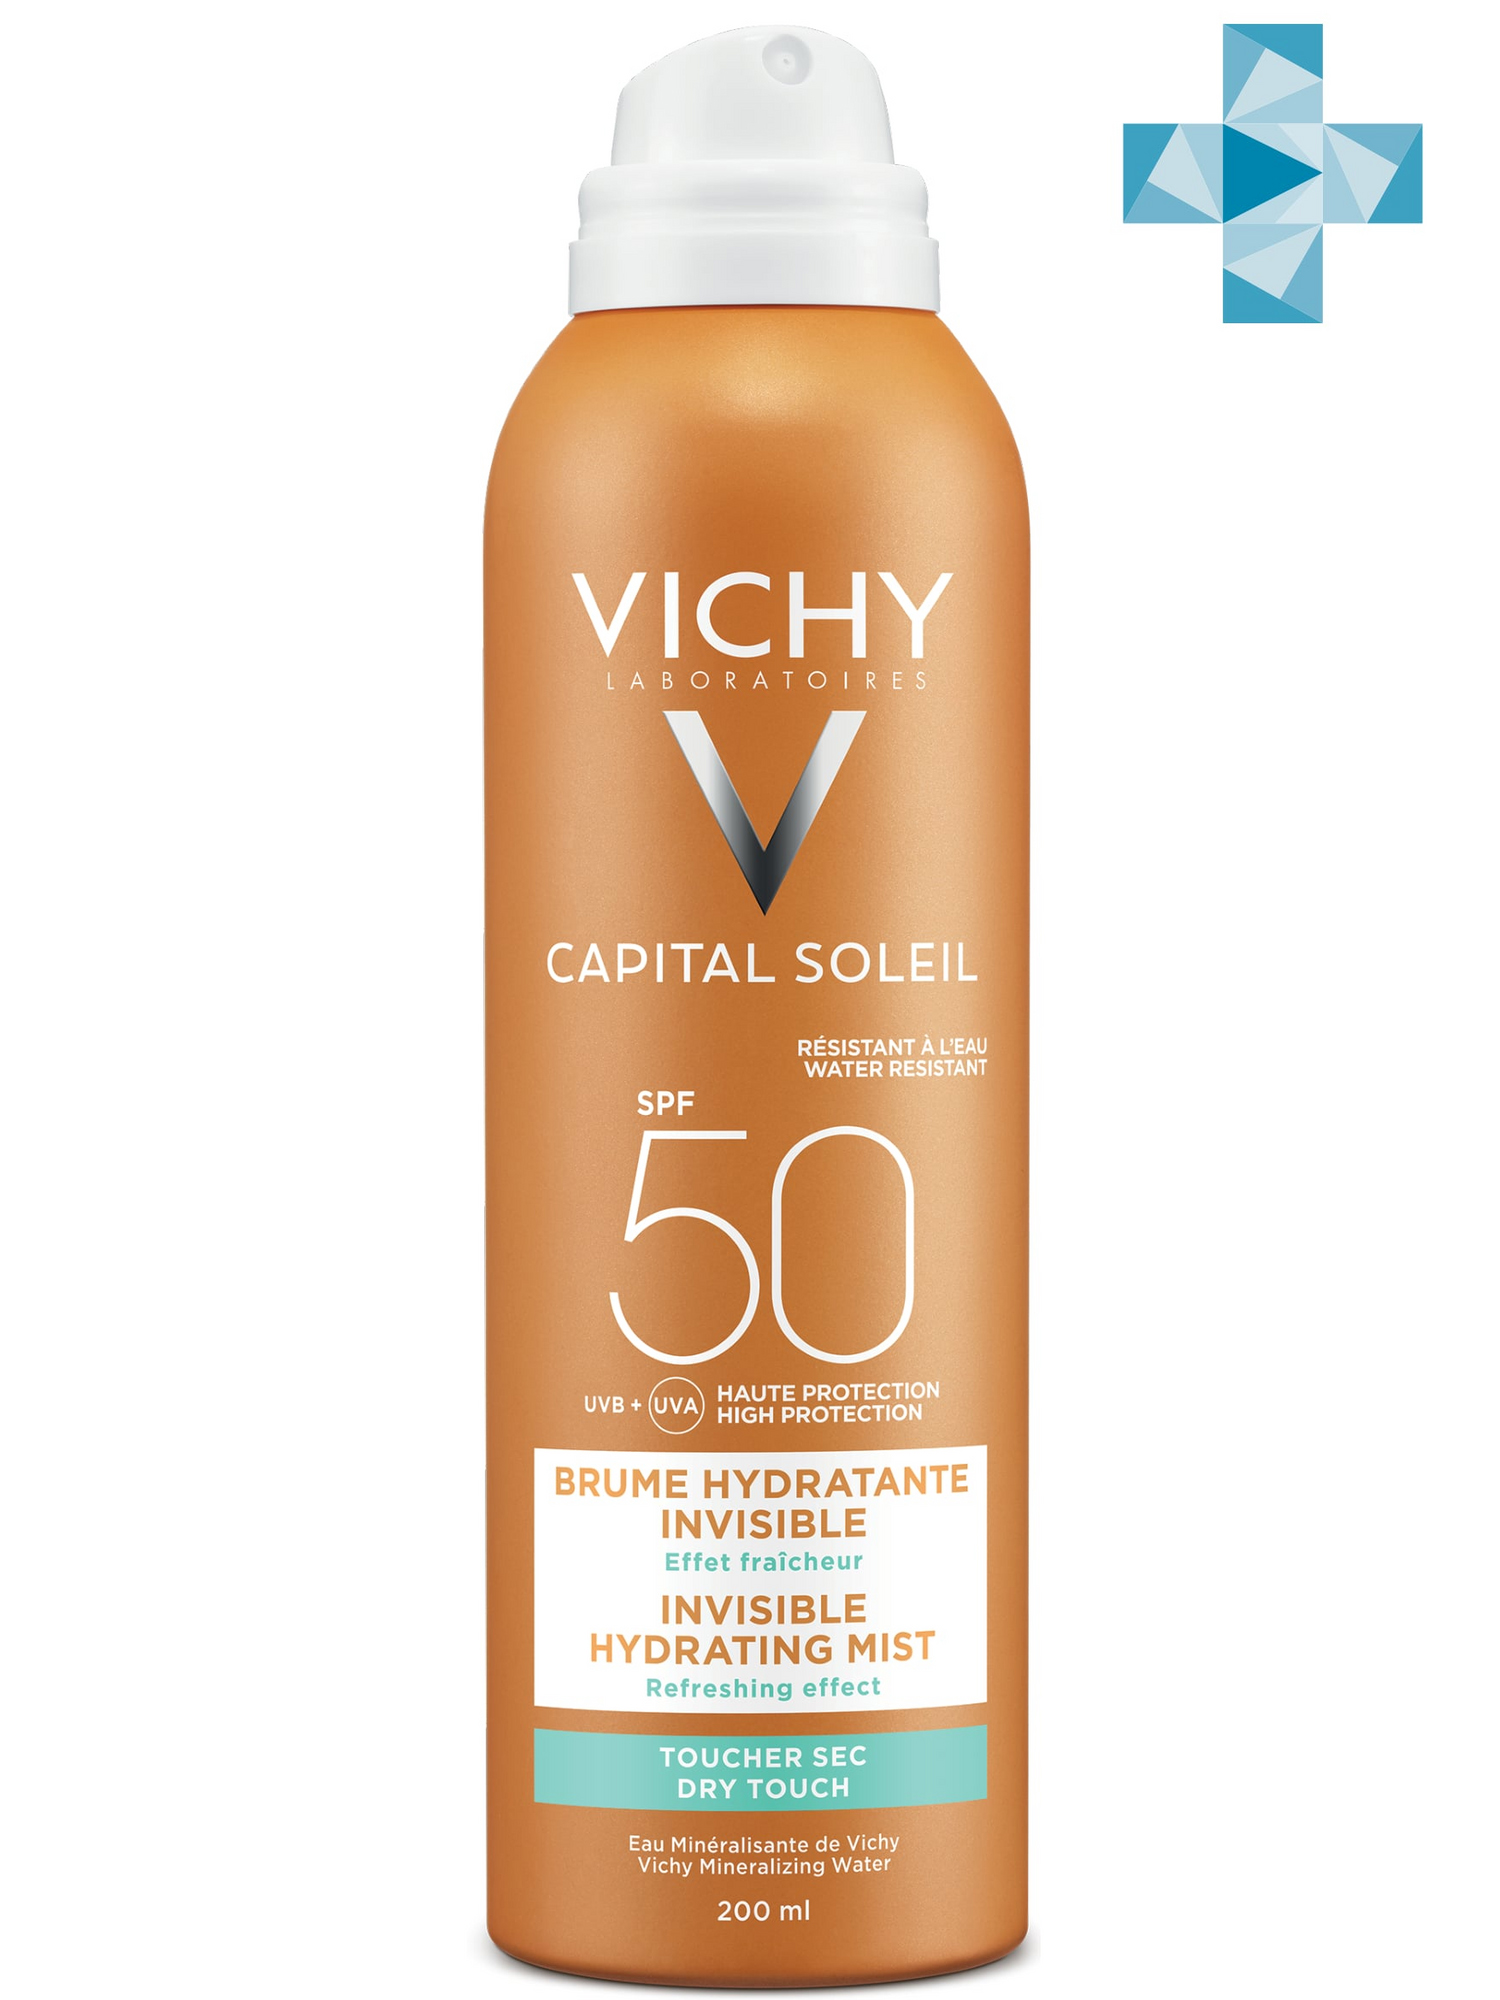 Виши Увлажняющий спрей-вуаль SPF 50, 200 мл (Vichy, Capital Ideal Soleil) фото 0